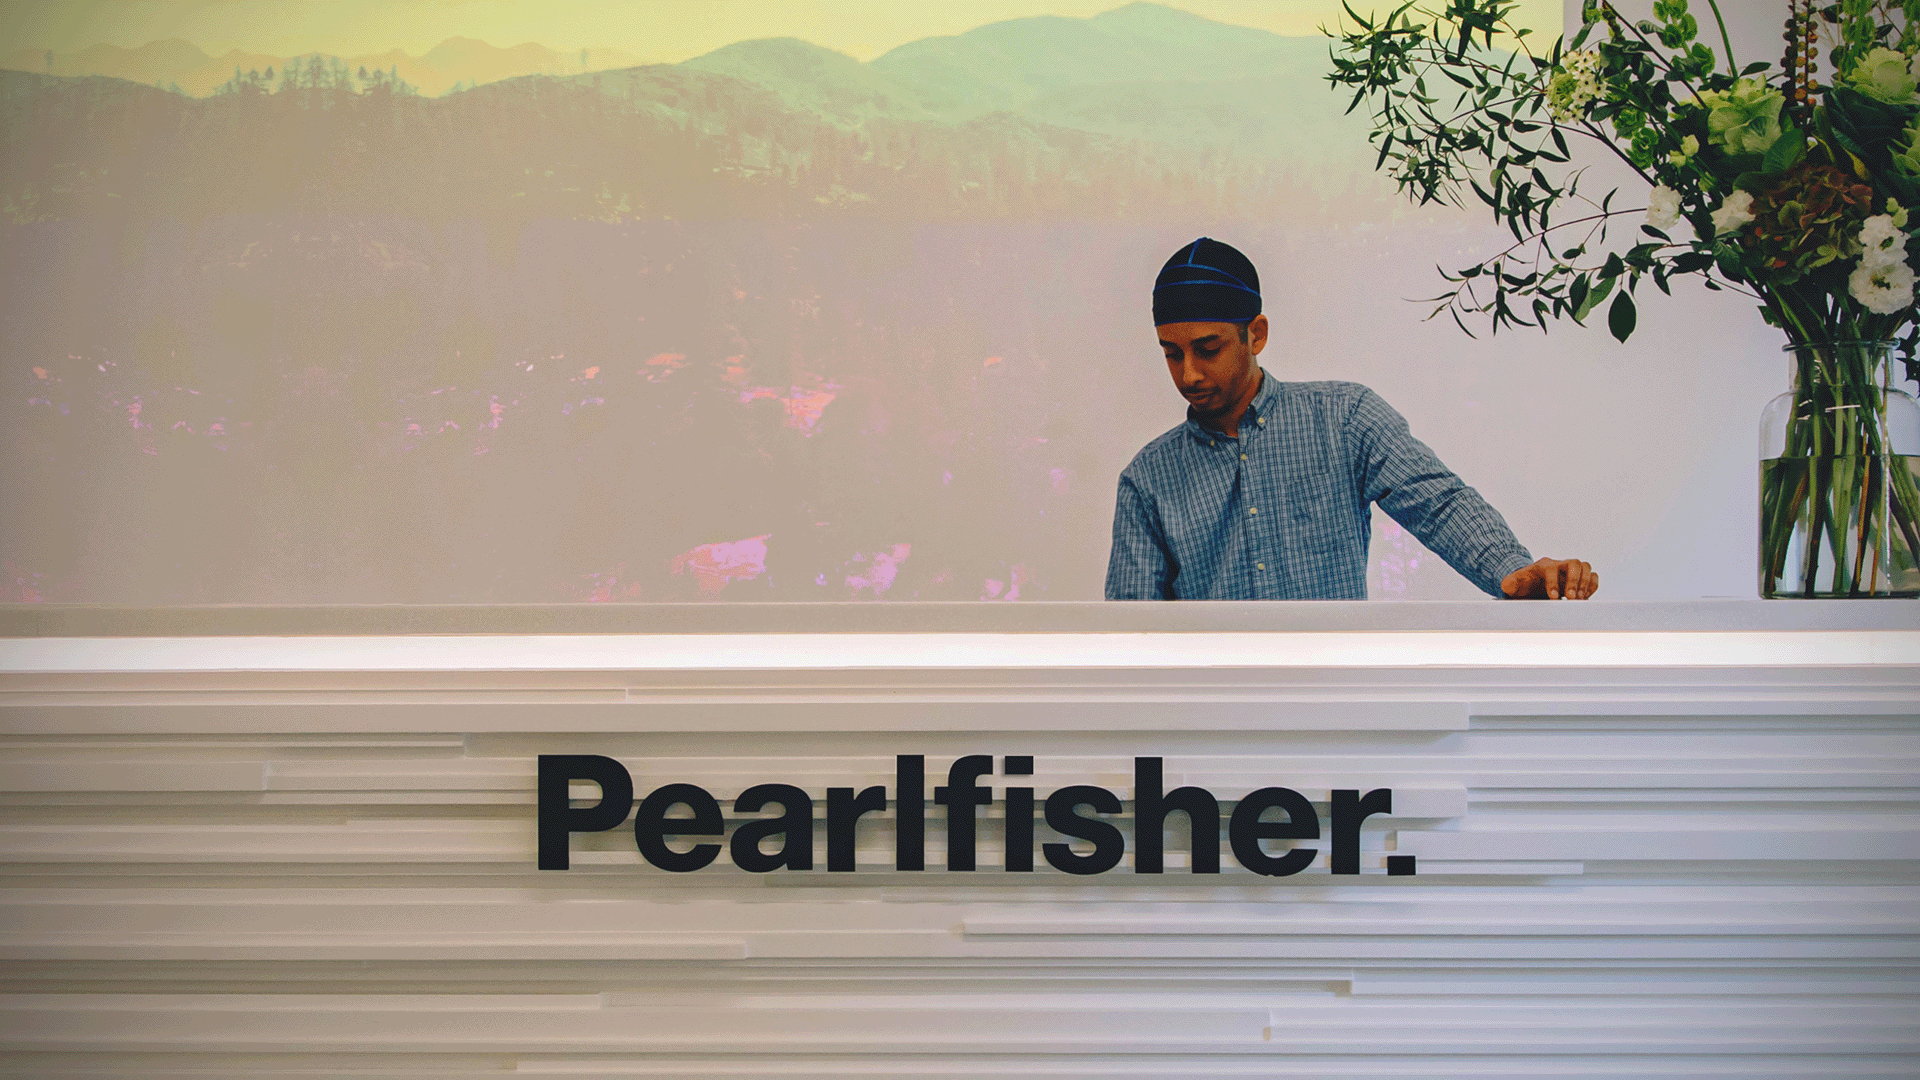 Pearlfisher London